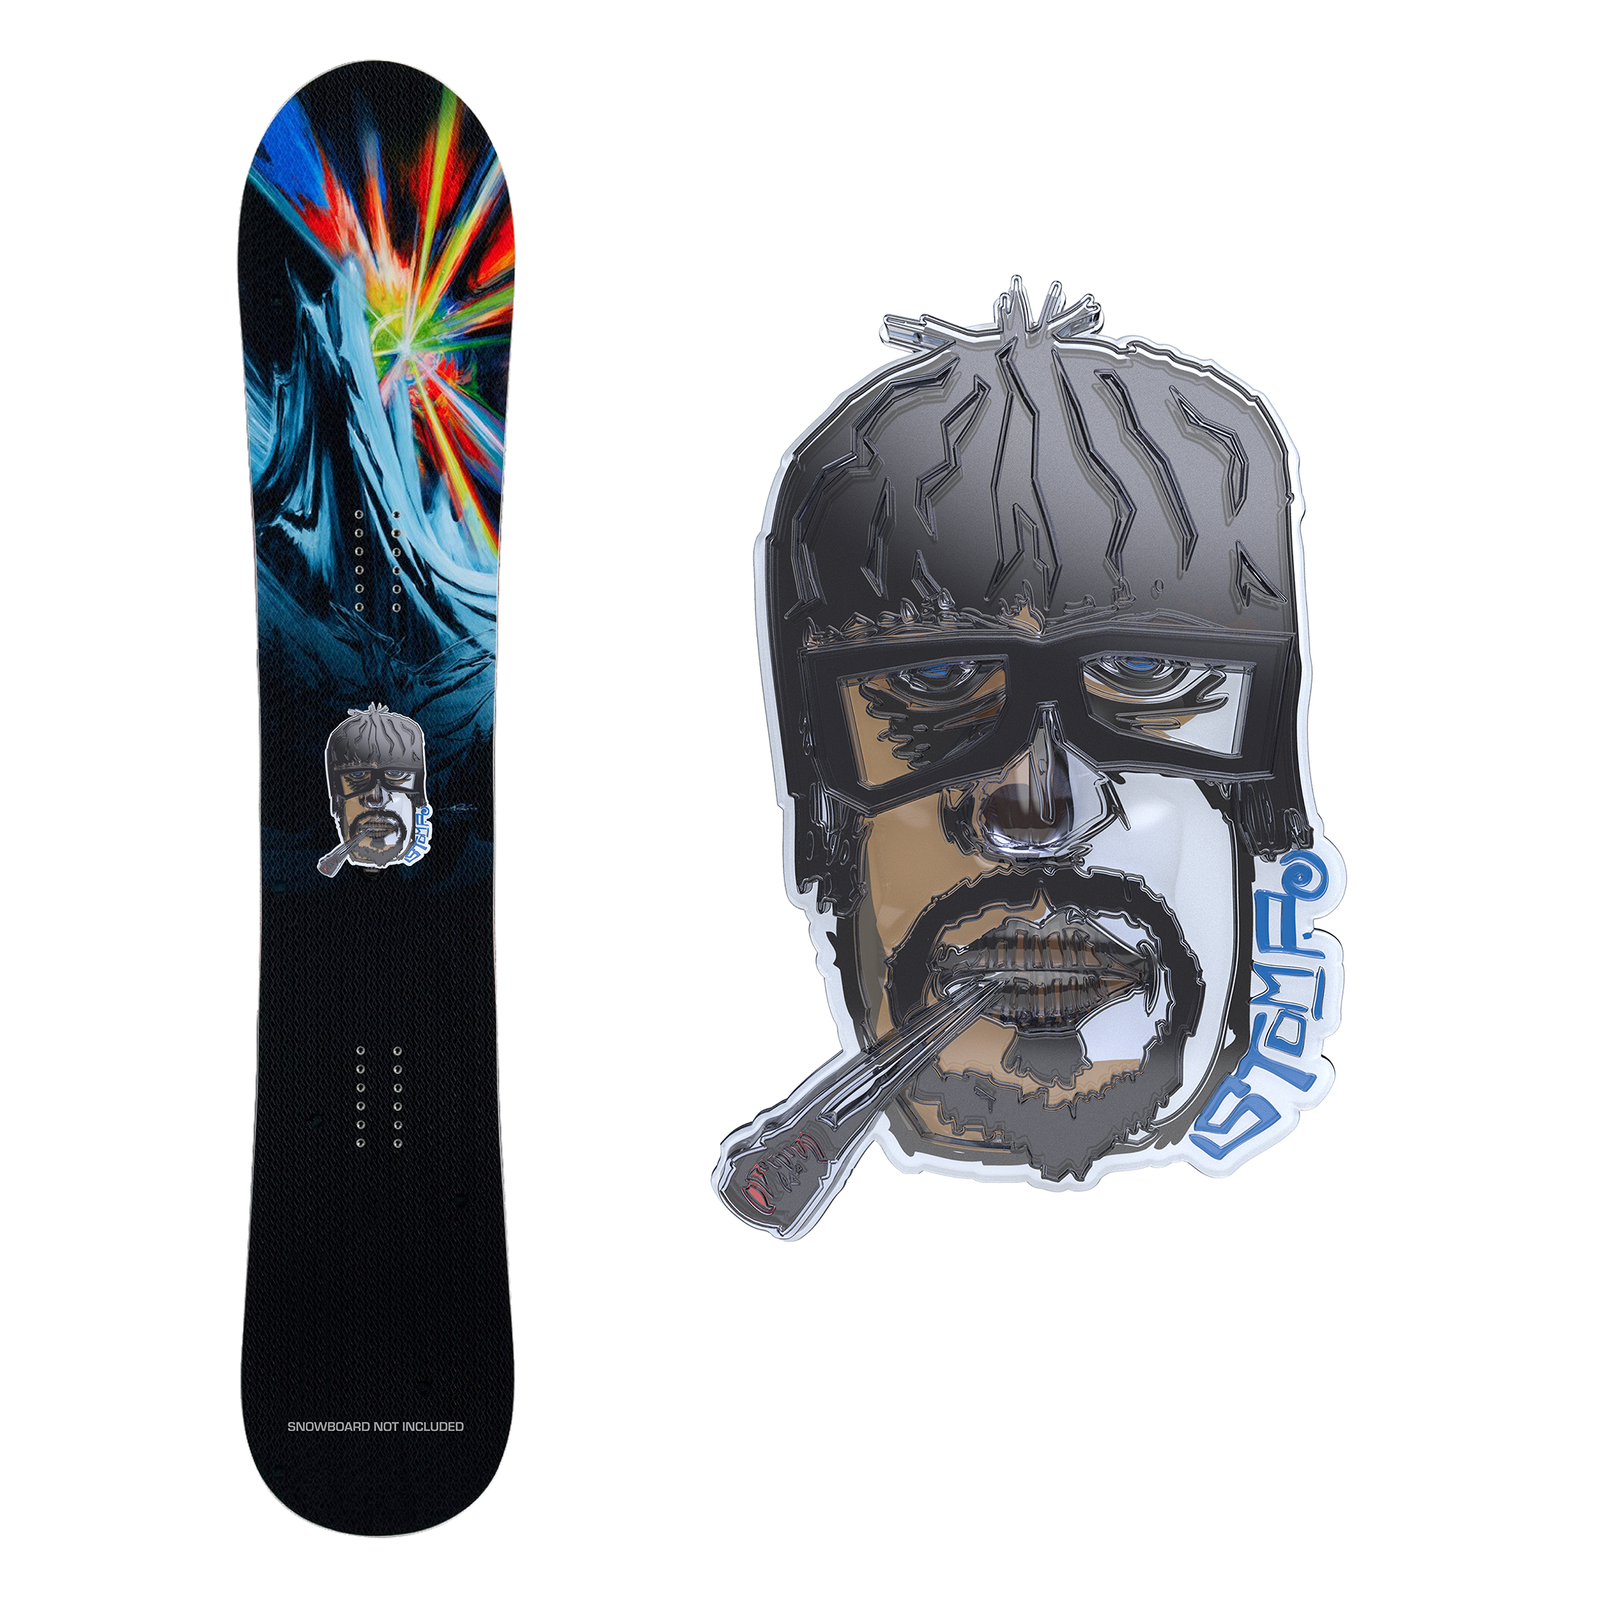 4PCS Decorative Stomp Pad Anti-skid Pad Snowboard Supply for Daily Snowboard